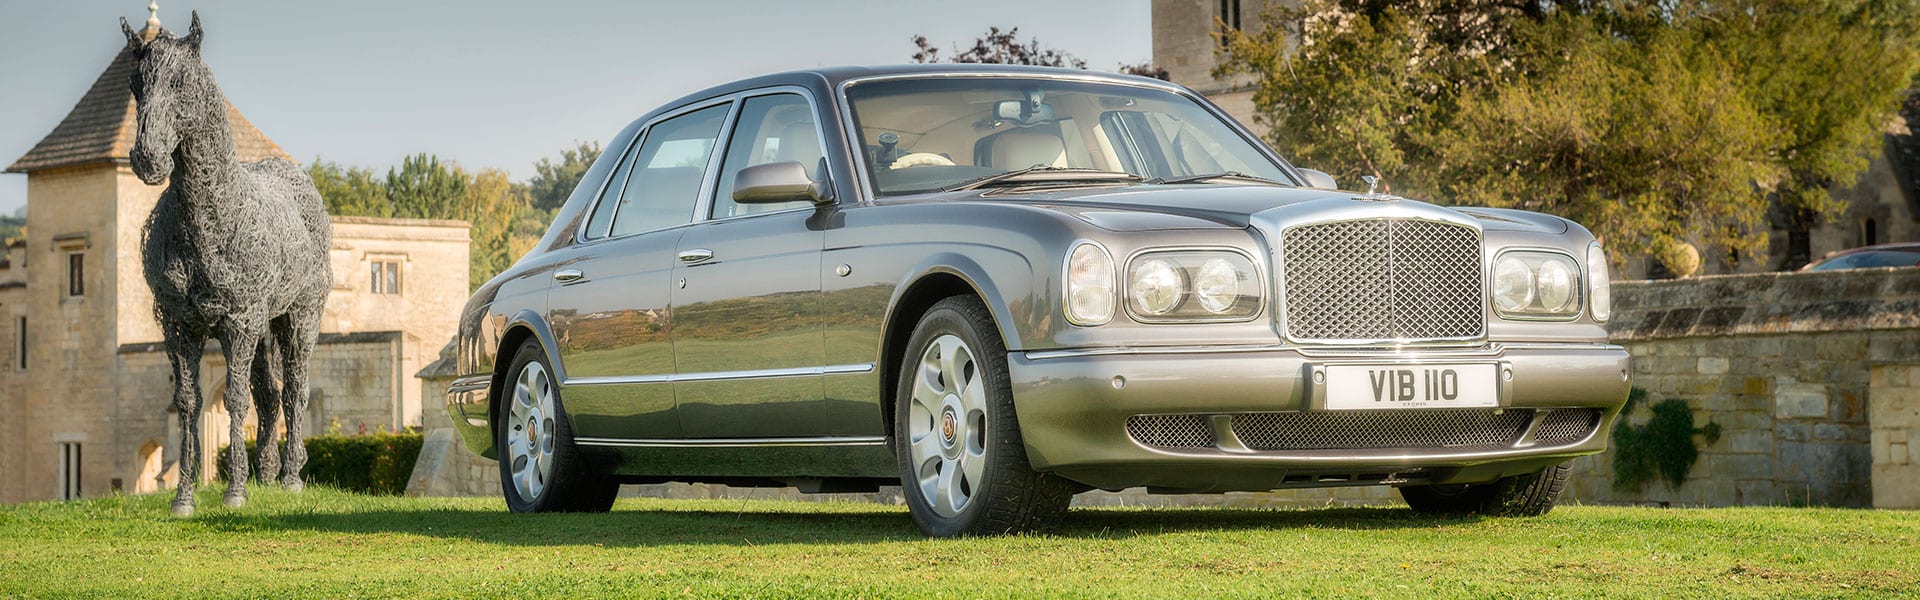 The exterior of the Bentley Arnage wedding car in grey